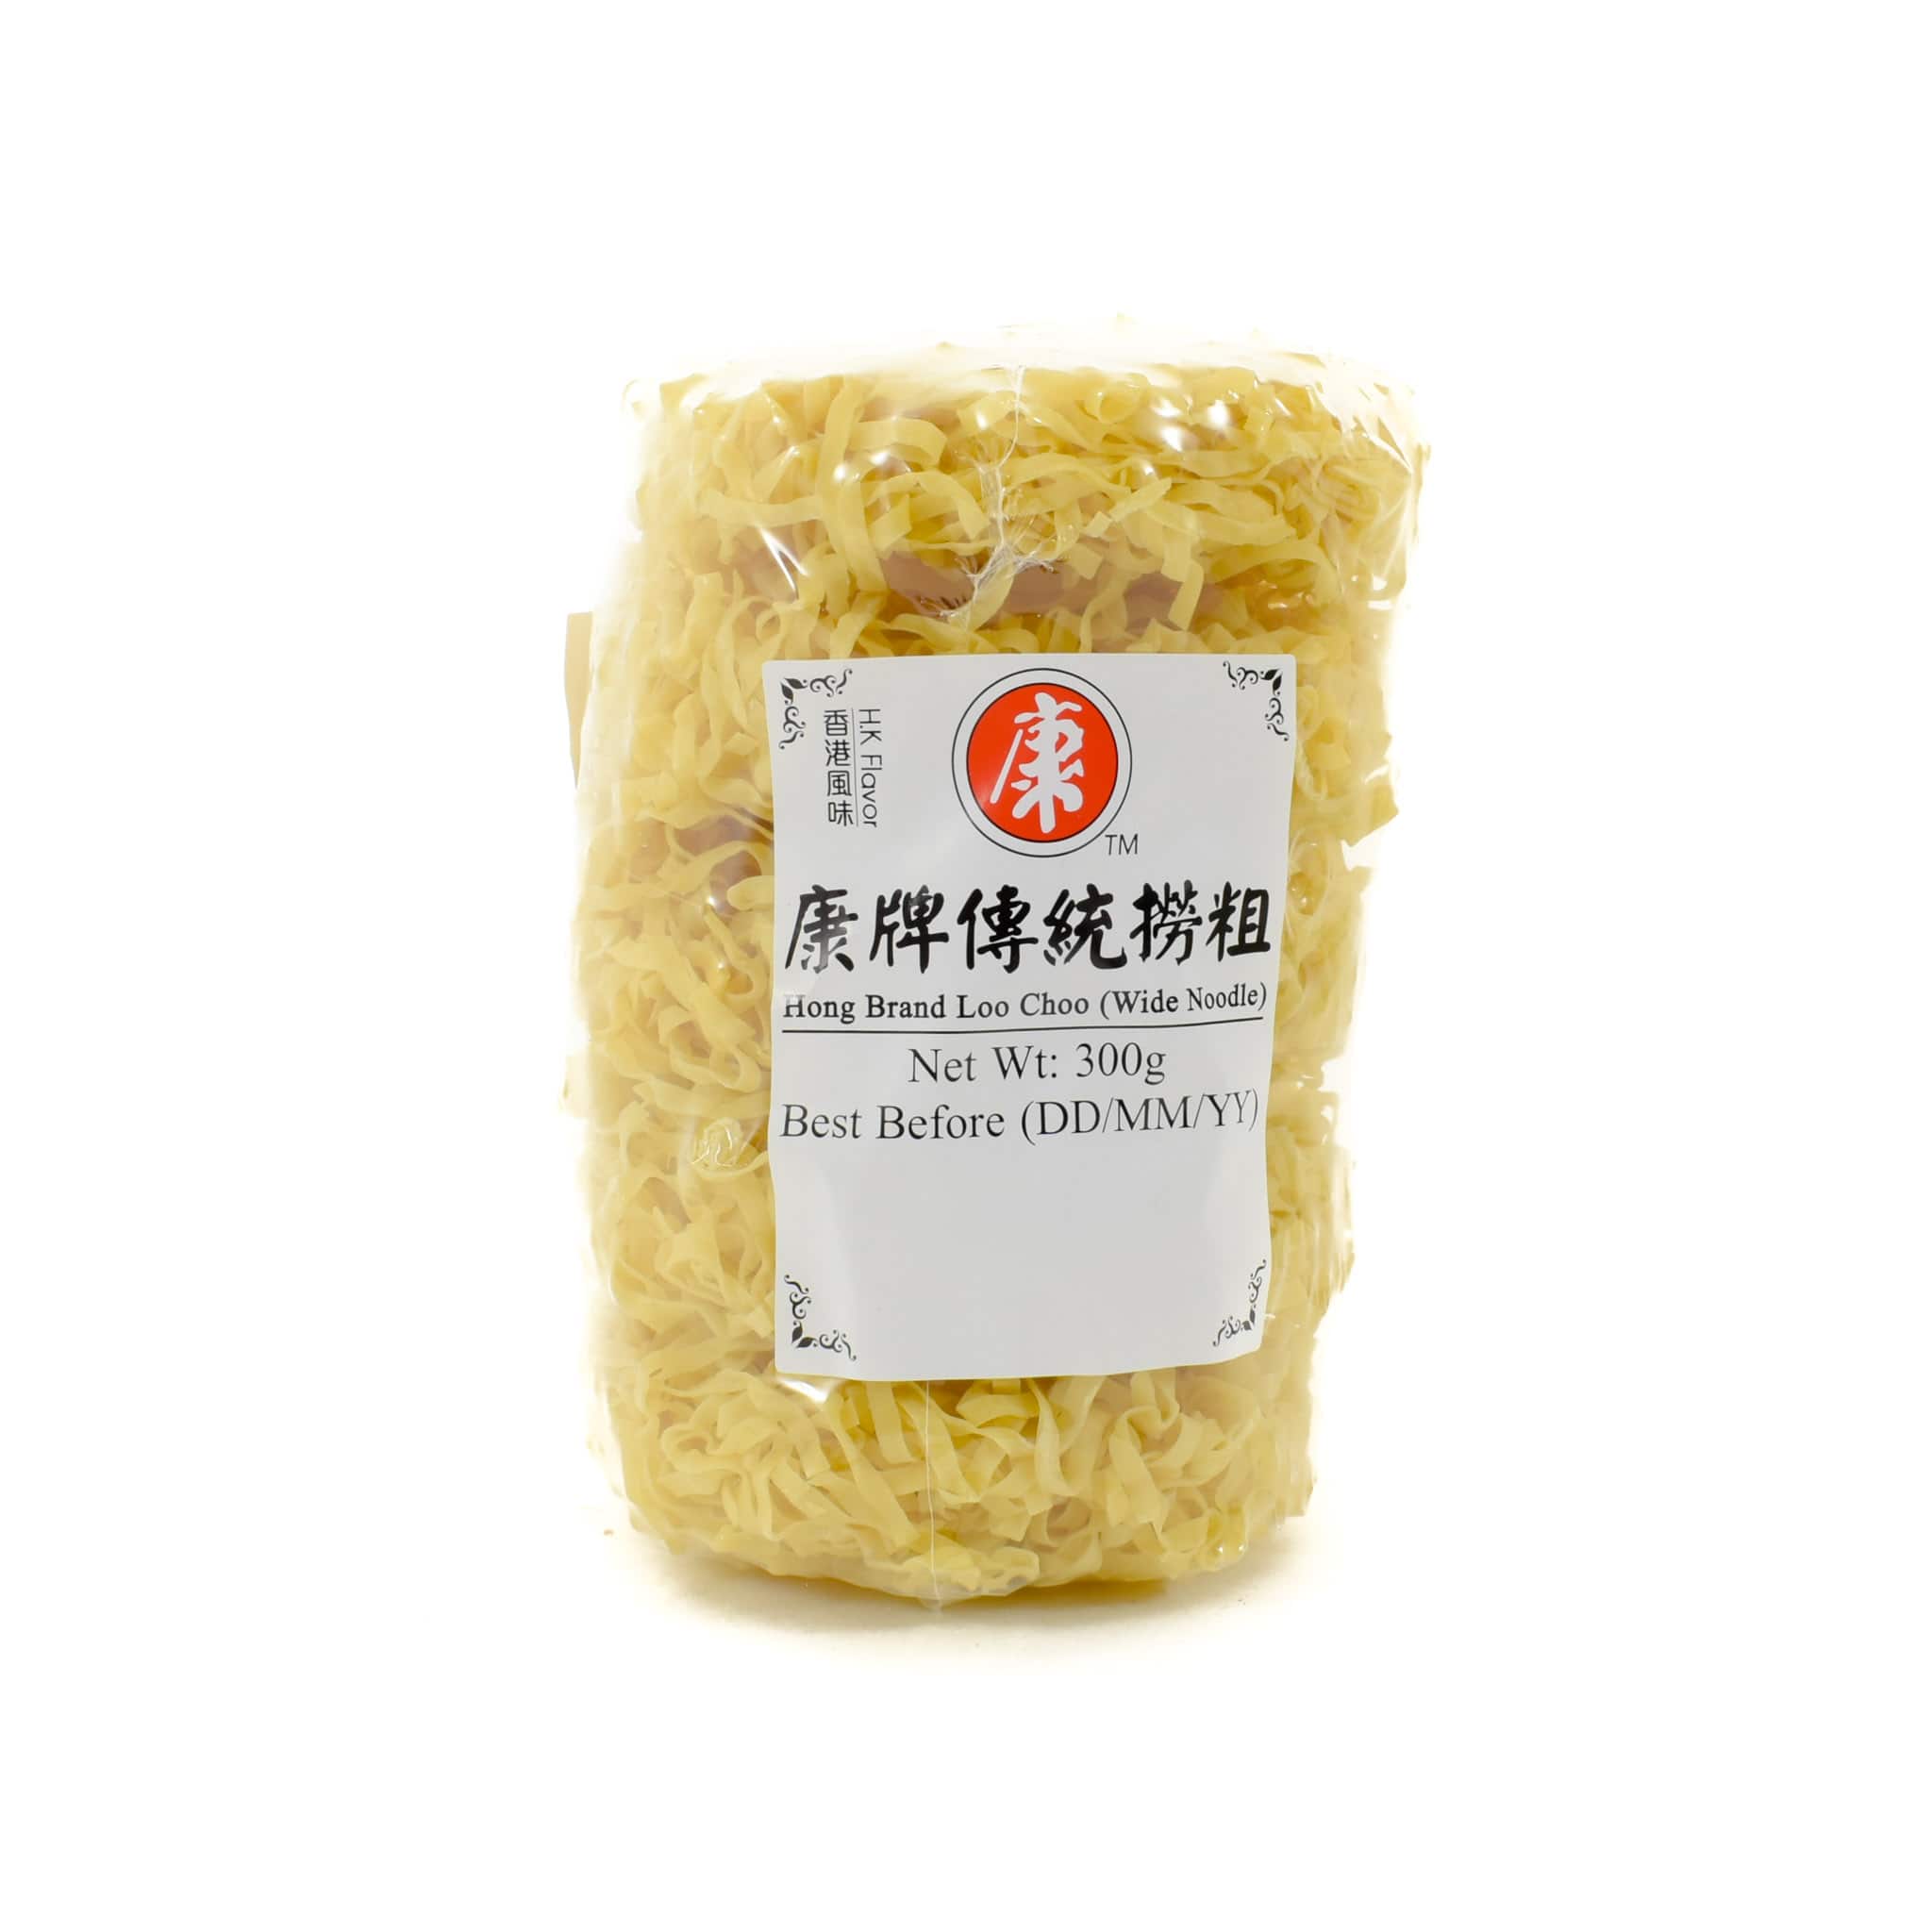 Hong Brand Loo Choo Broad Noodle 60g x 5